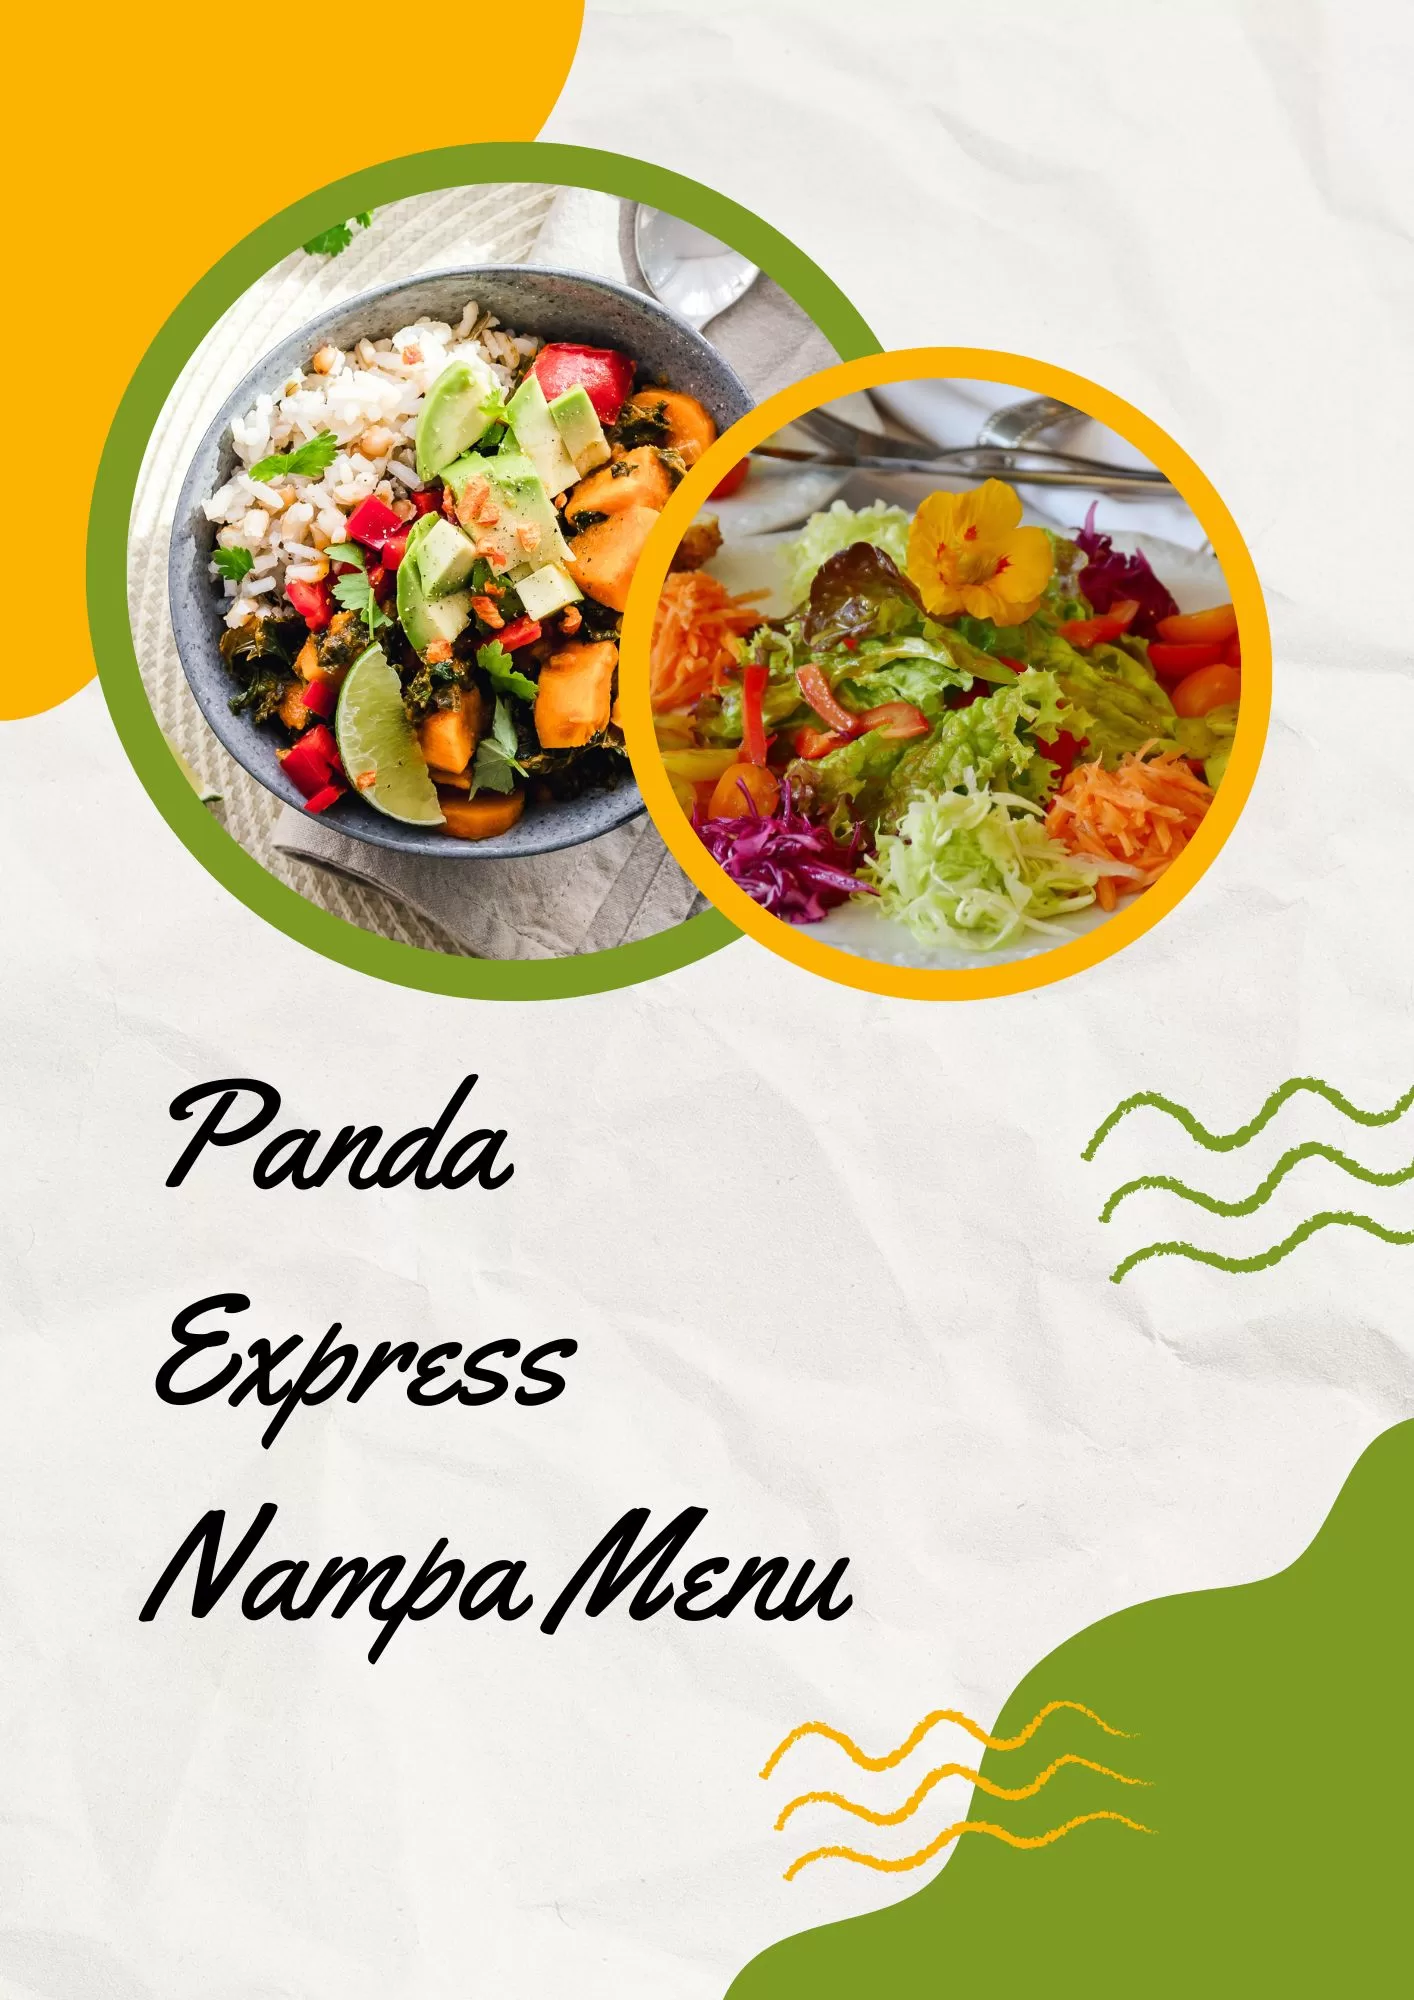 panda express nampa menu